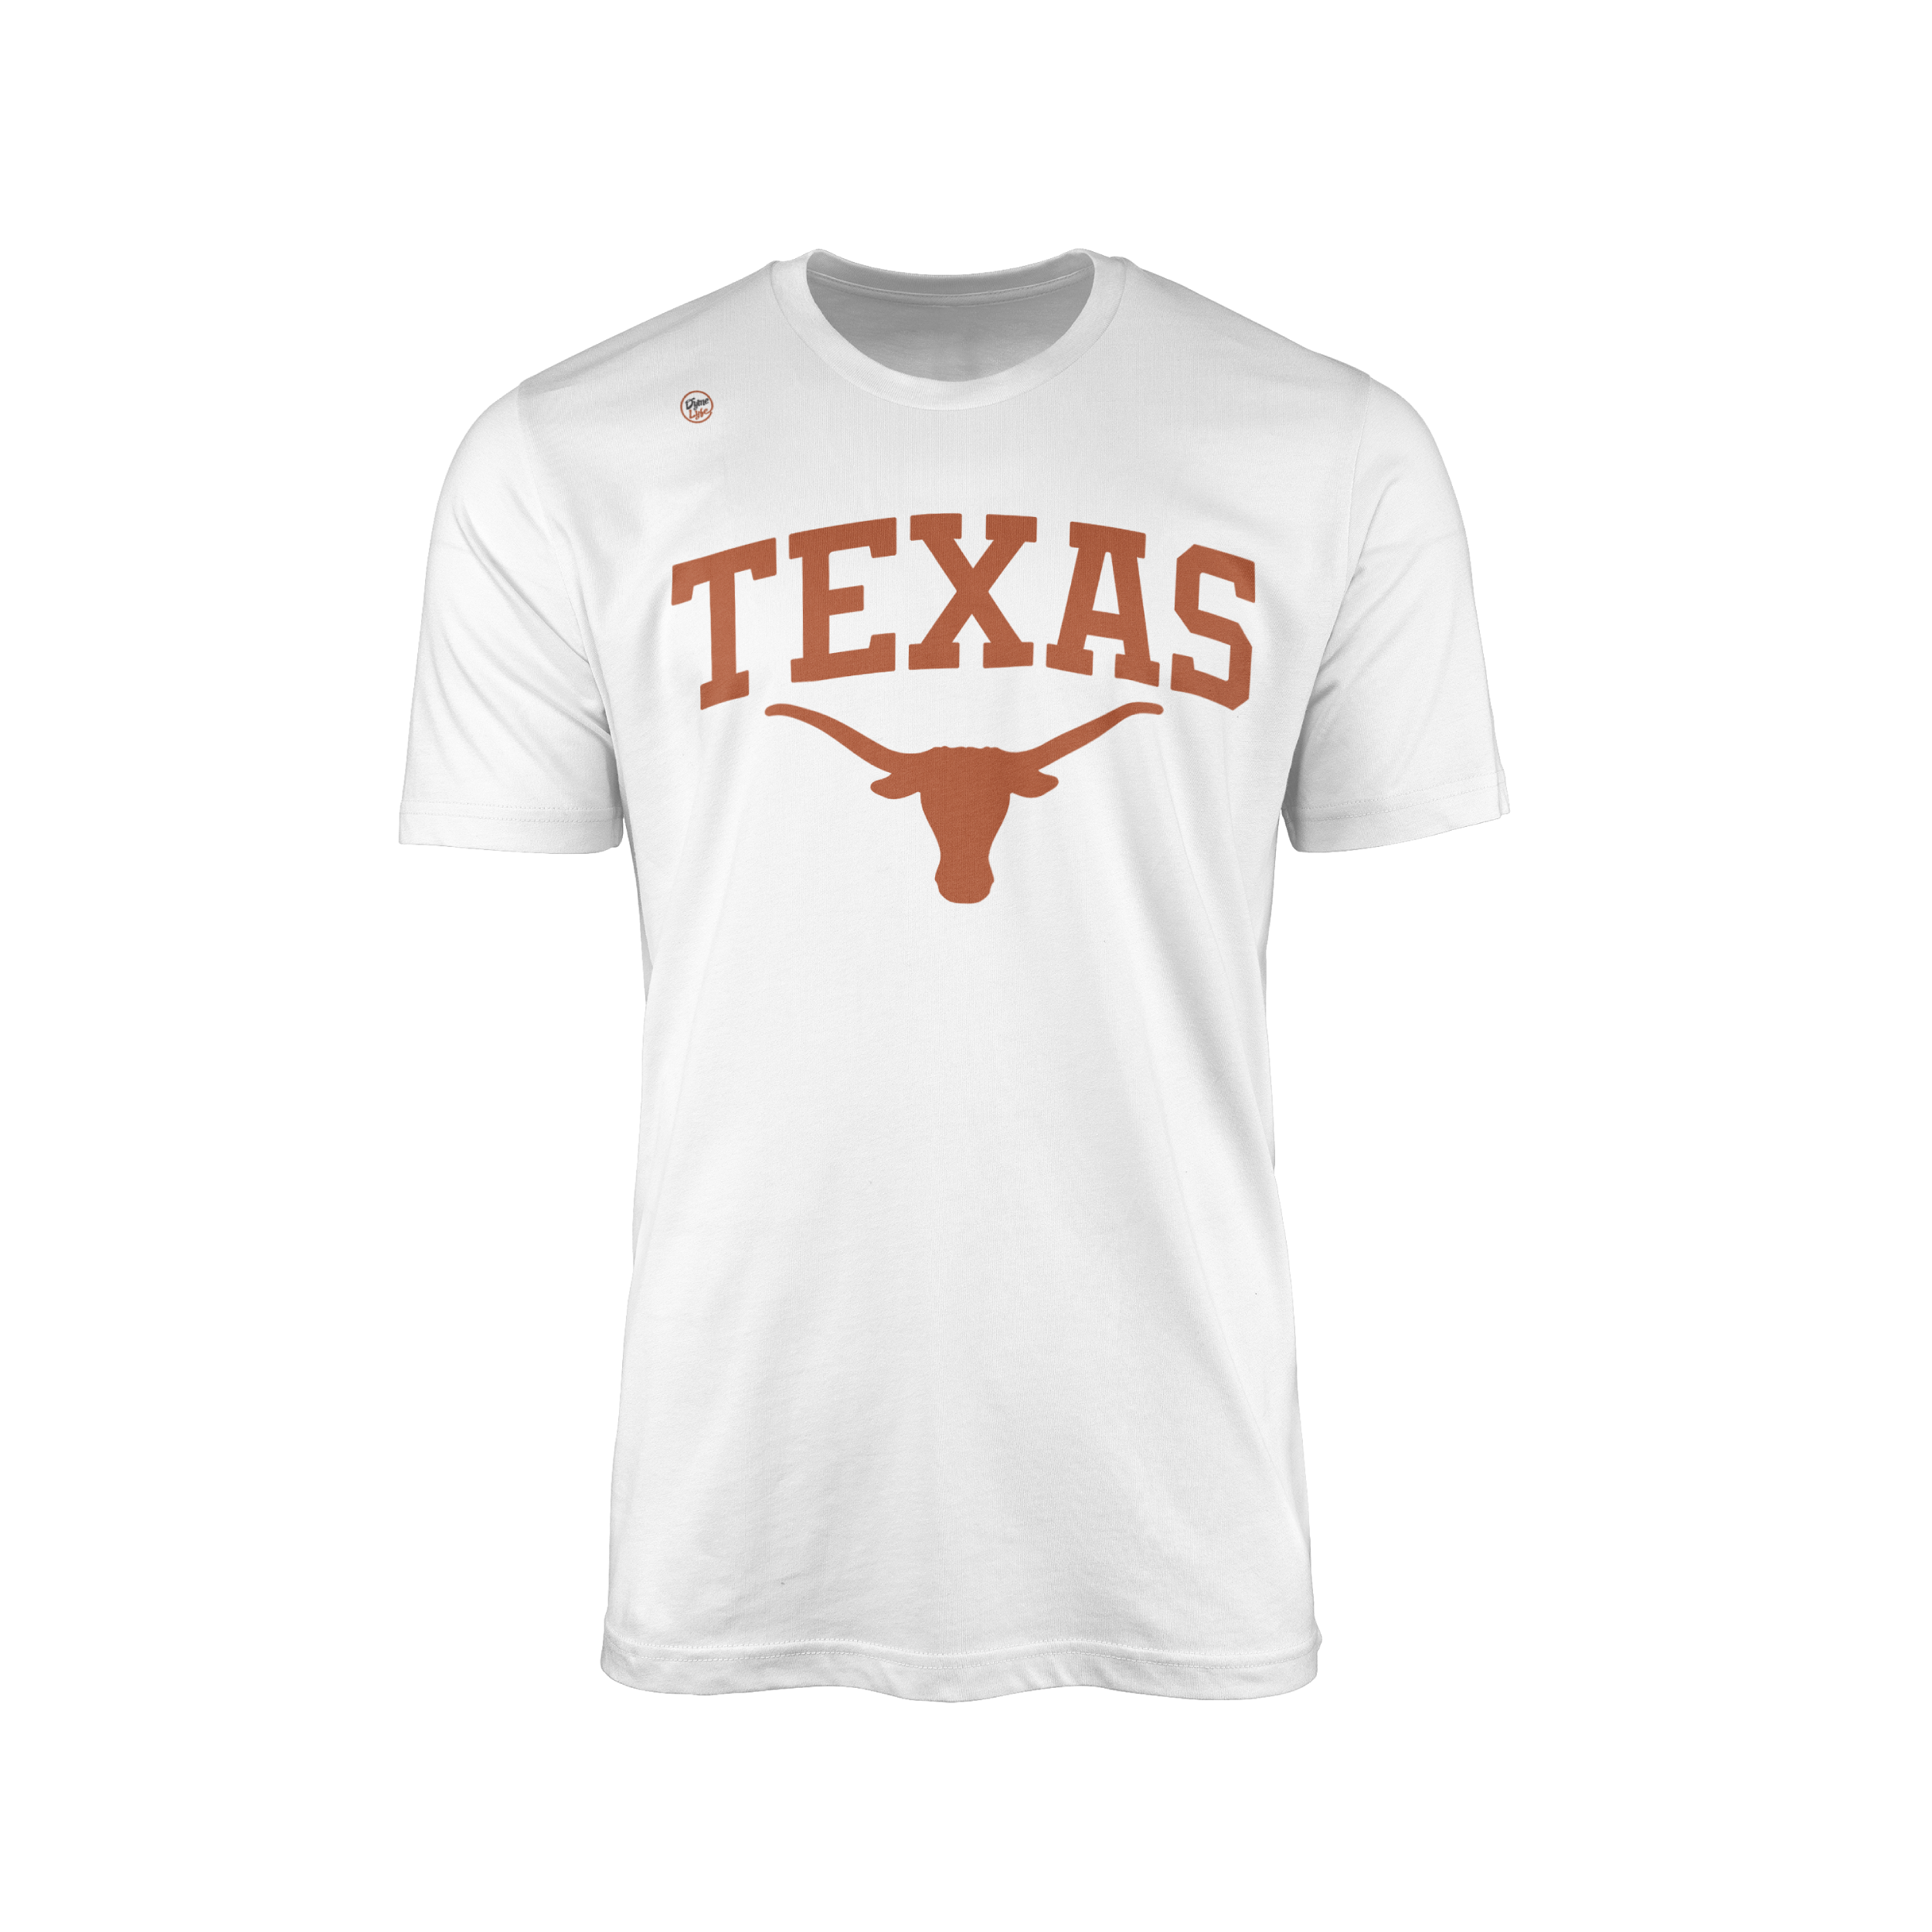 Texas Longhorns Men’s Logo Tee